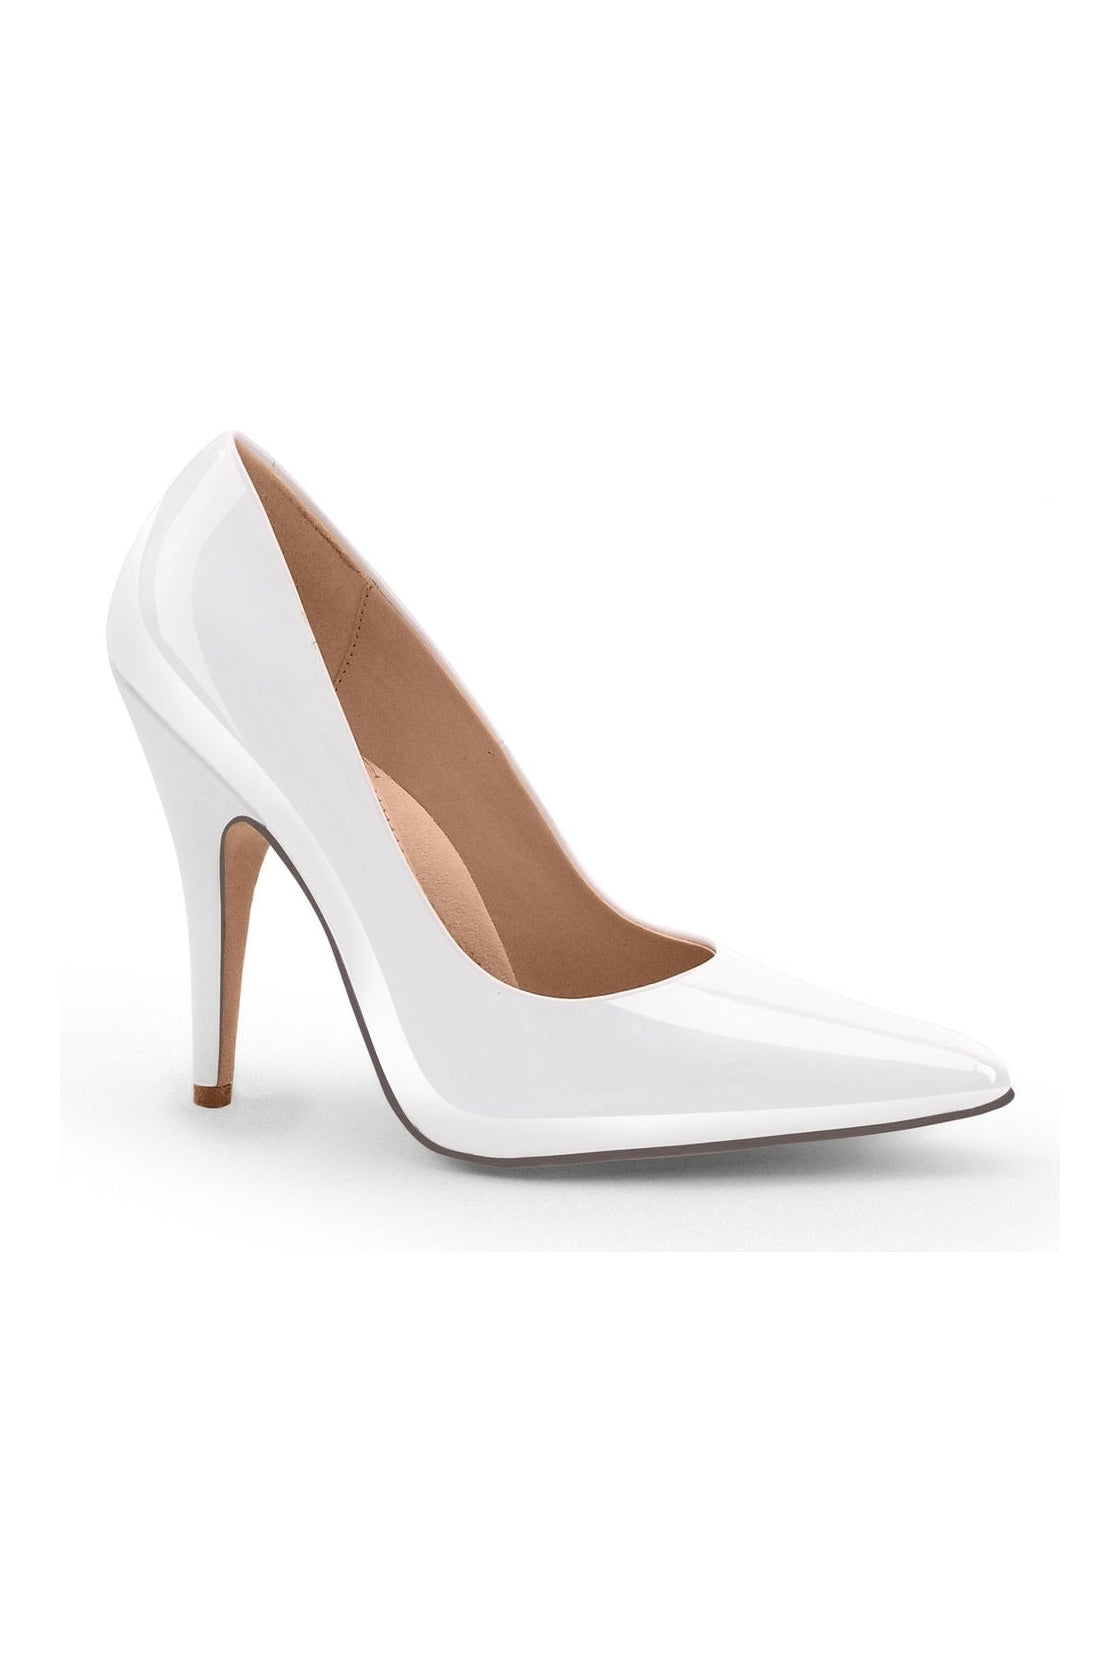 Pointed Pump Heels | Heels, Pumps heels, Women shoes